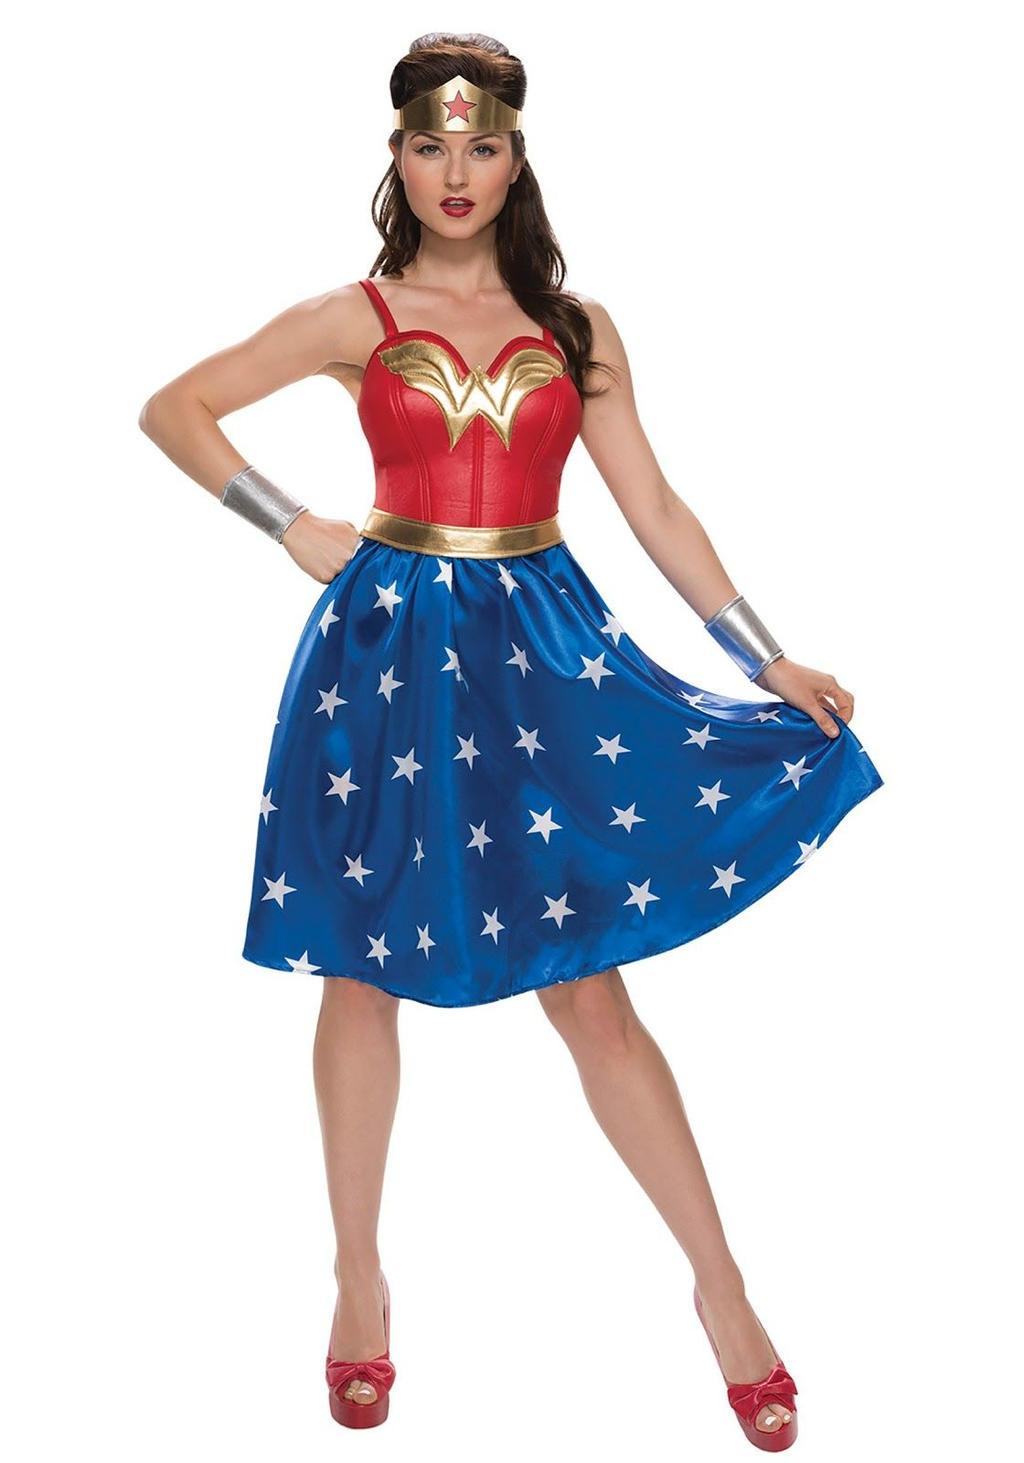 Wonder Woman : Typical wonder woman costume.